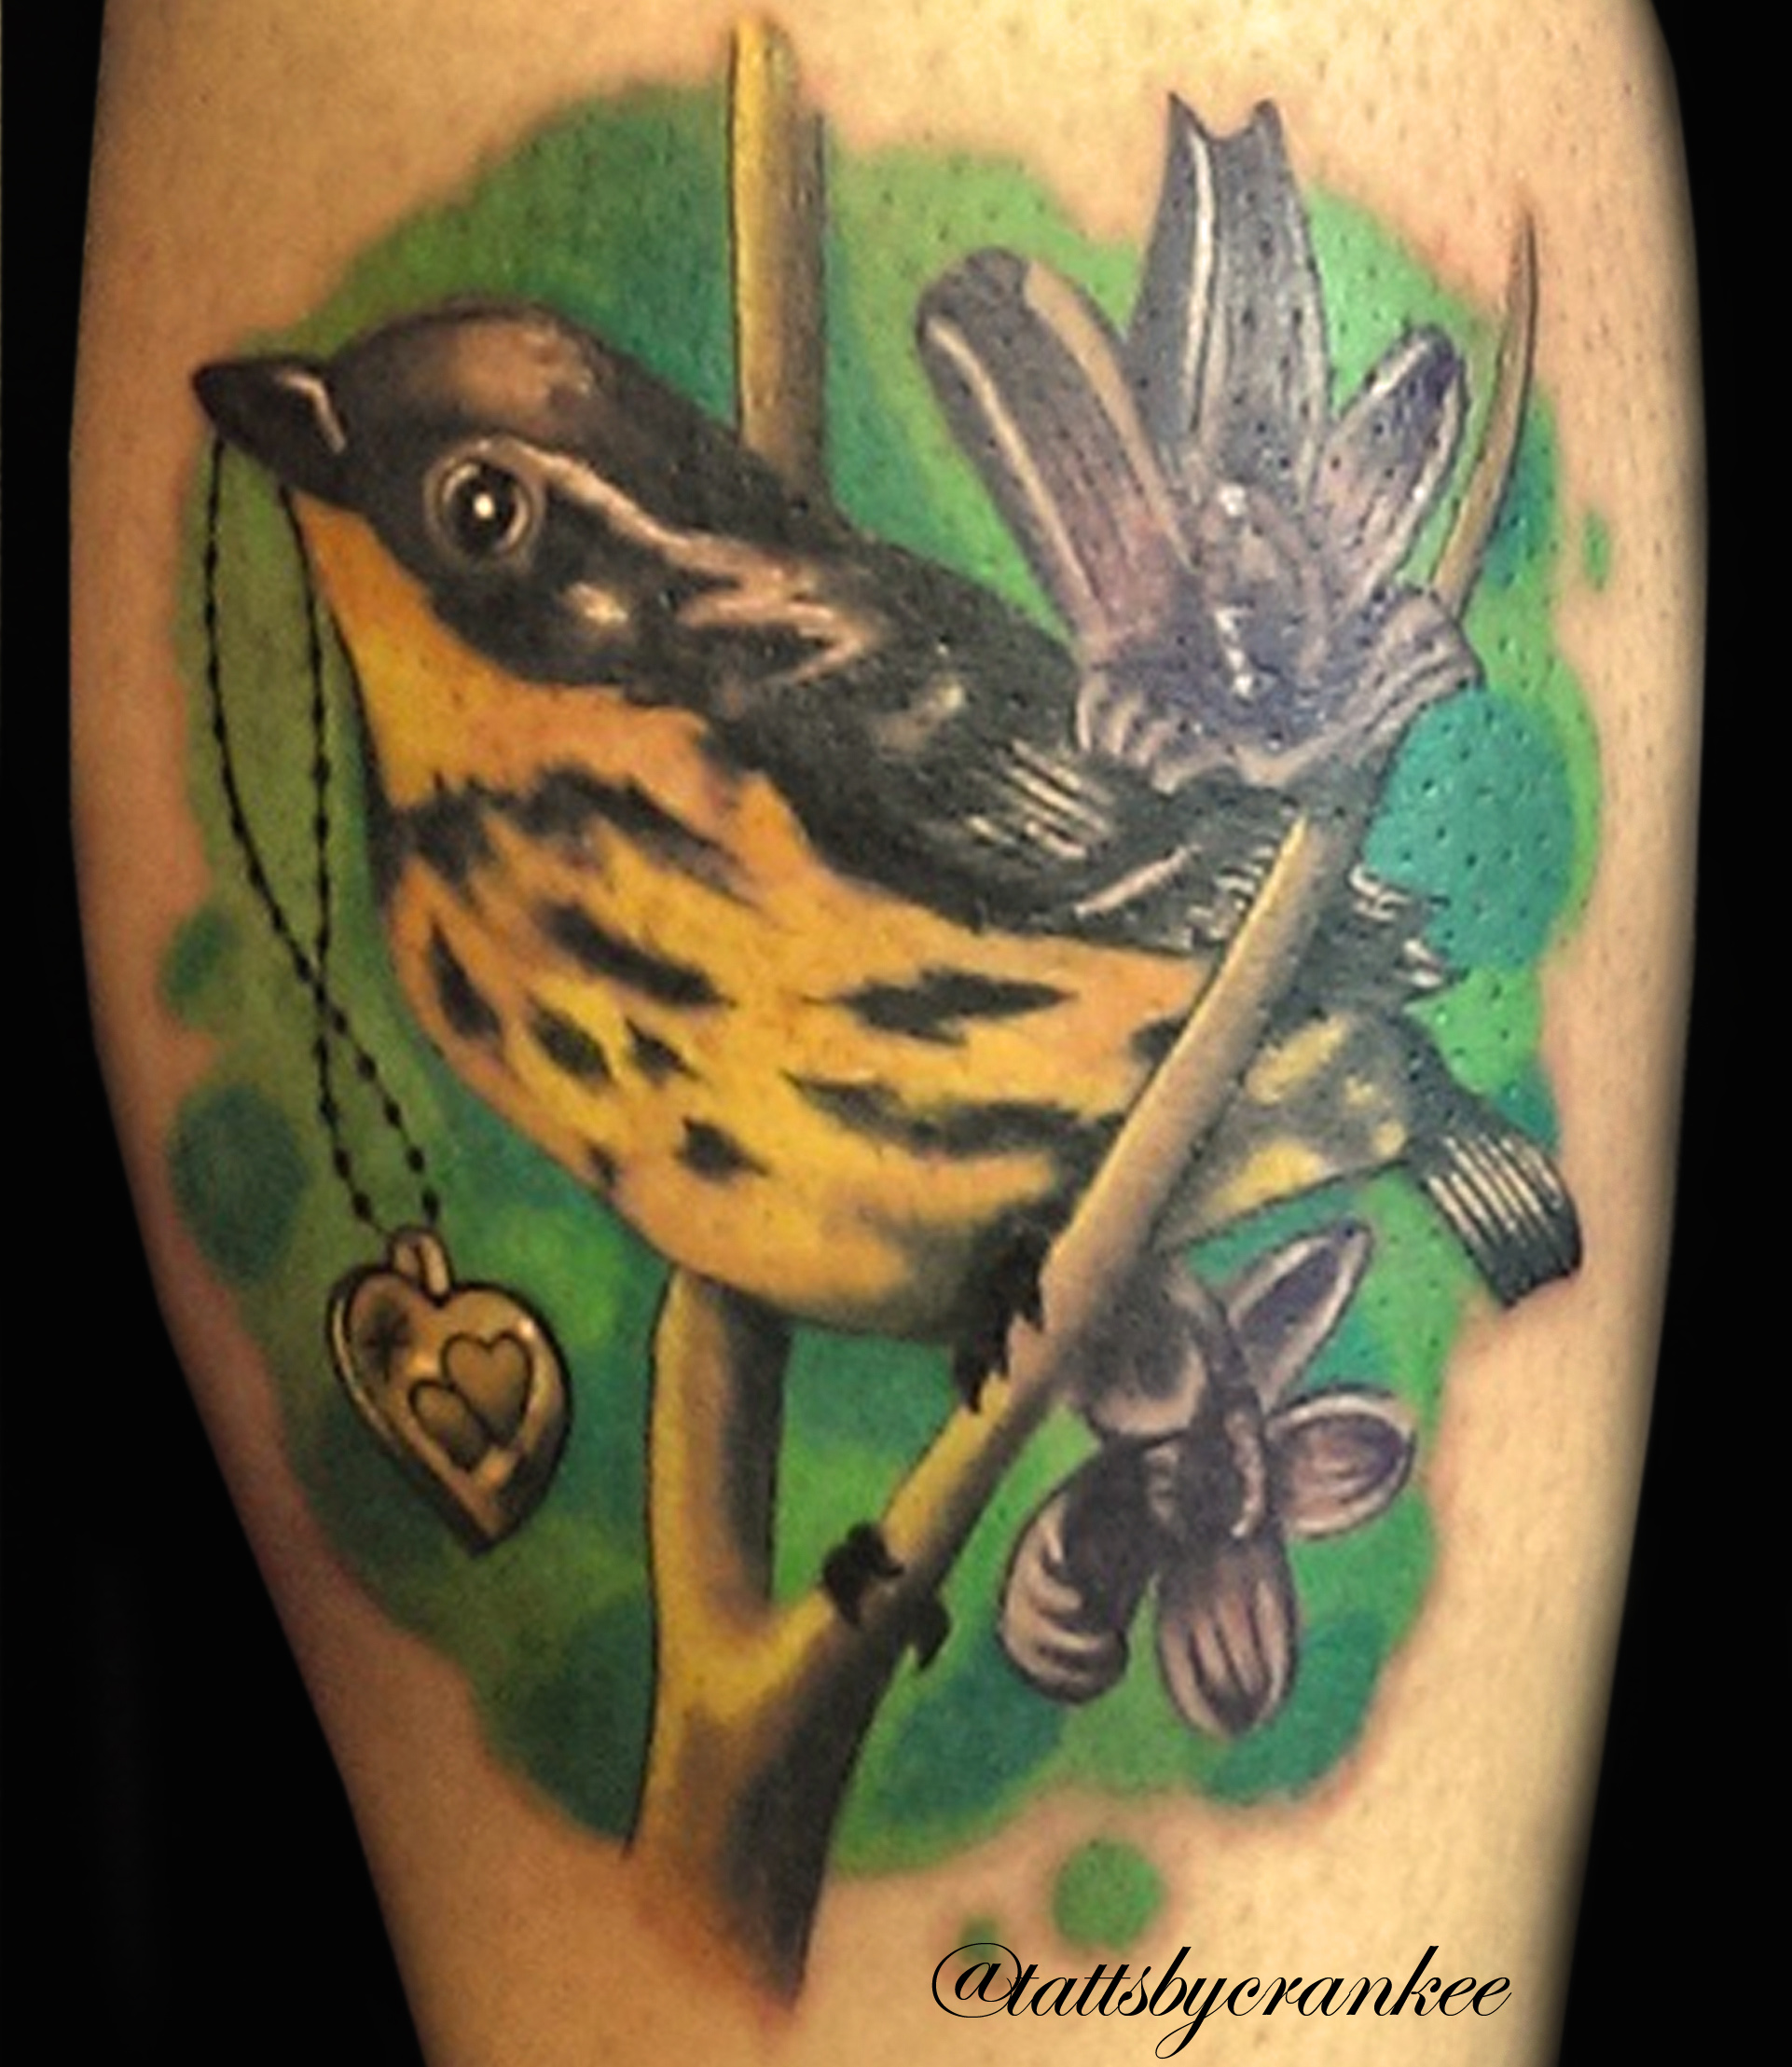 Attractive Heart Locket In Sparrow Beak Tattoo Design For Leg Calf By Randy Brard